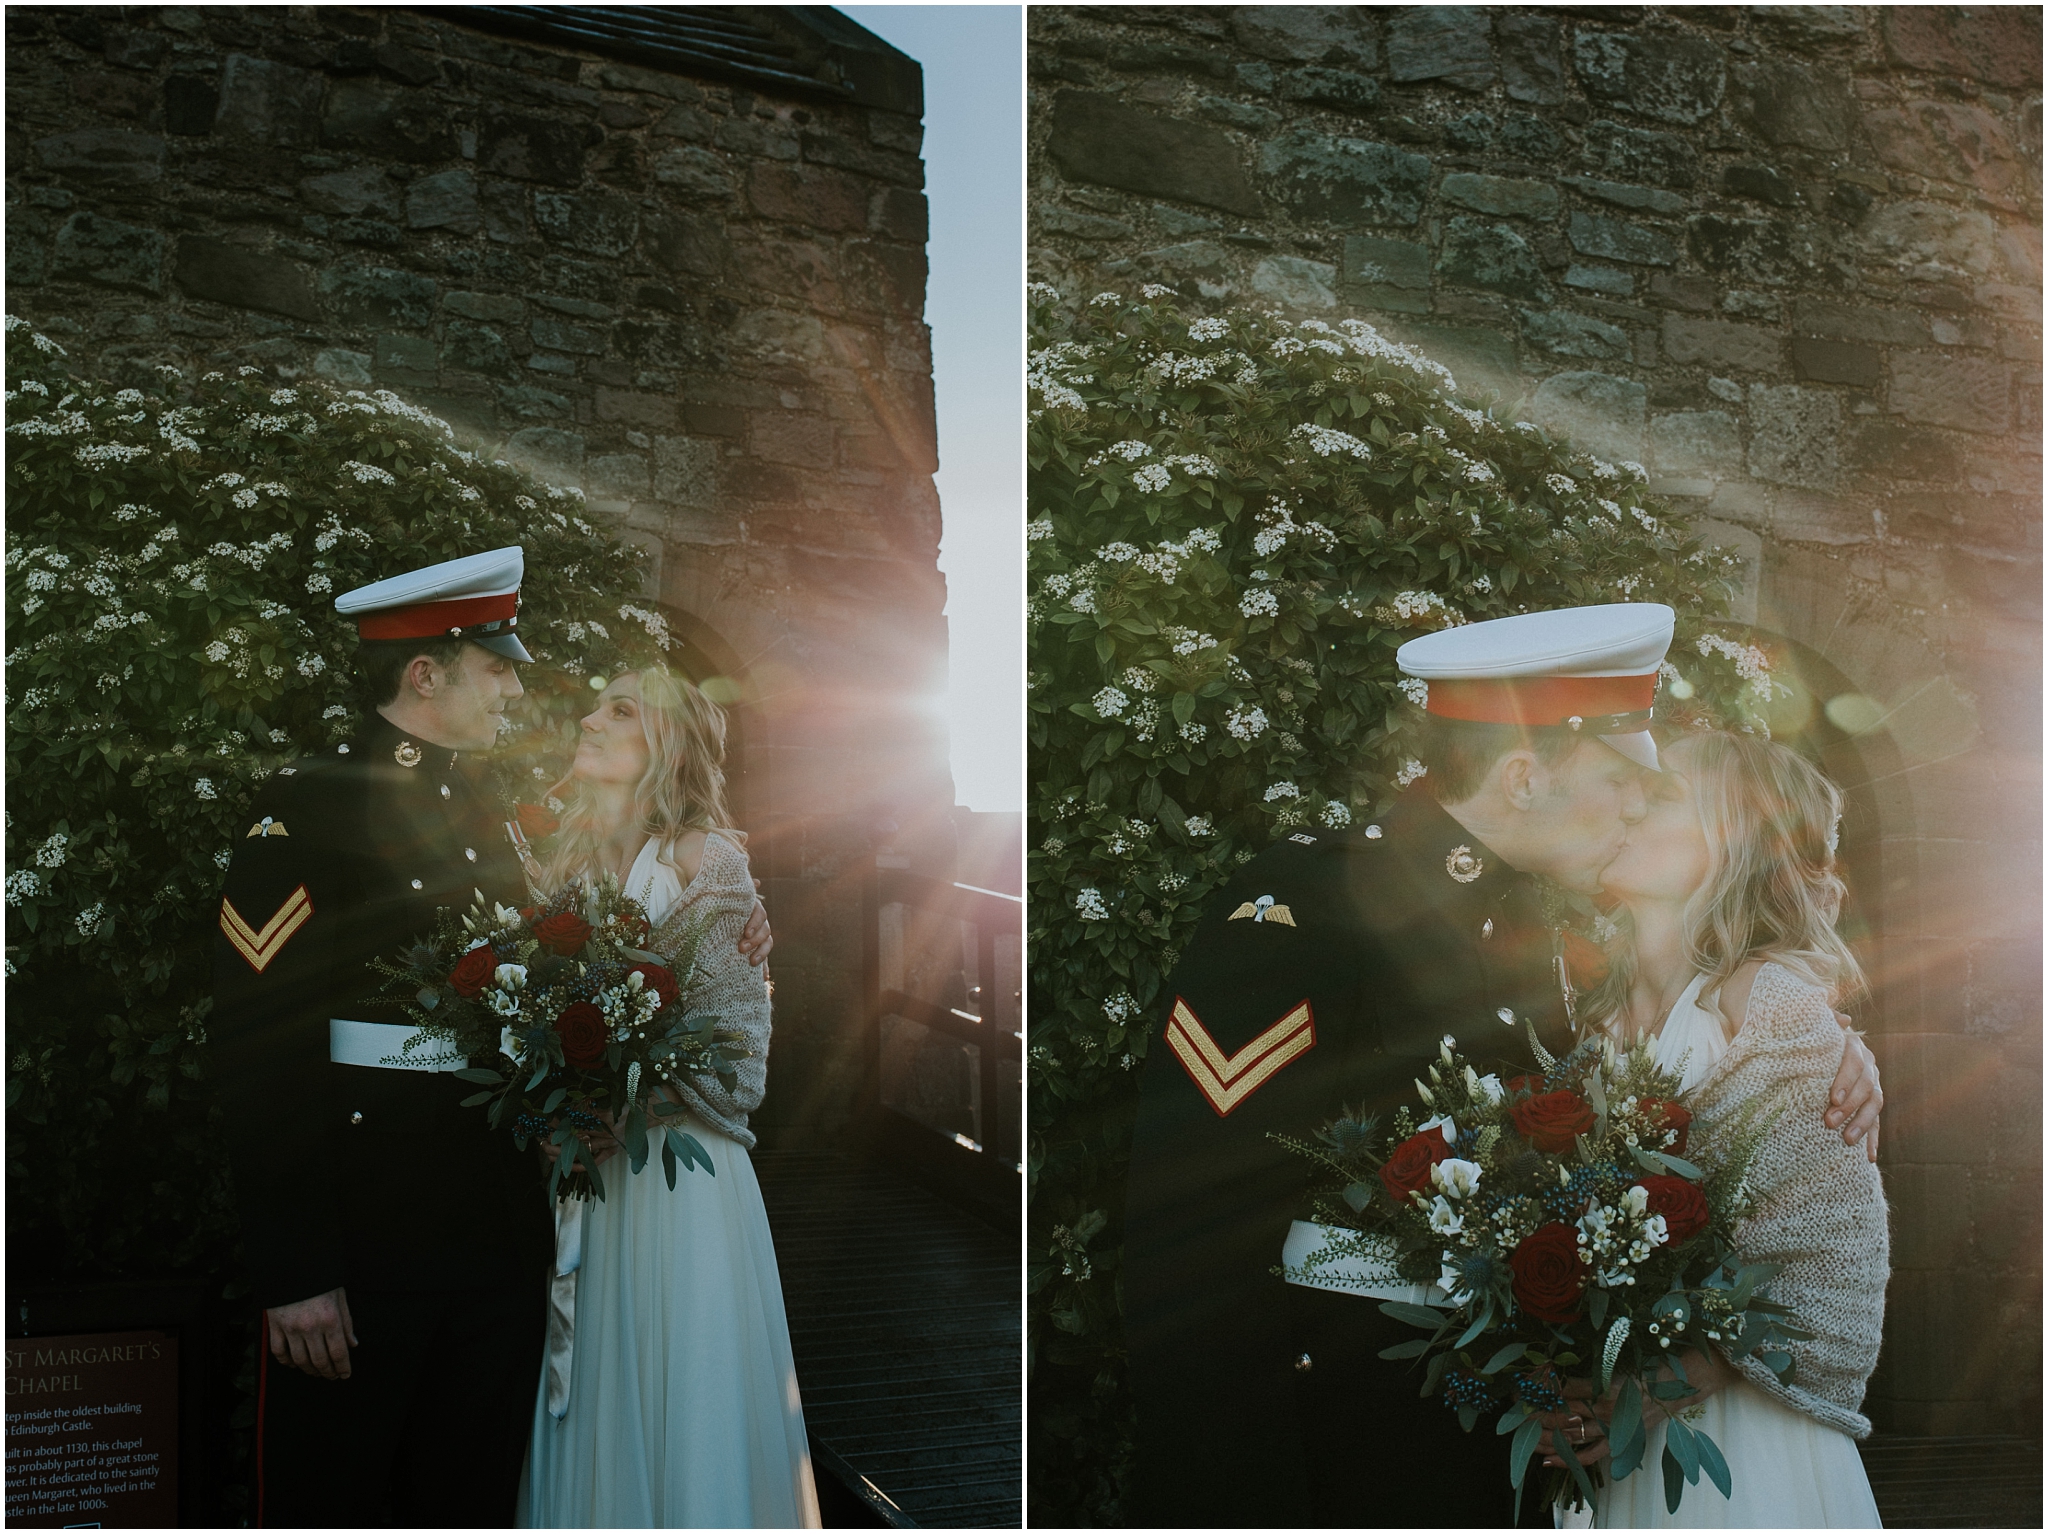 castle,edinburgh,edinburghweddingphotographer,elopement,scotland,wedding,